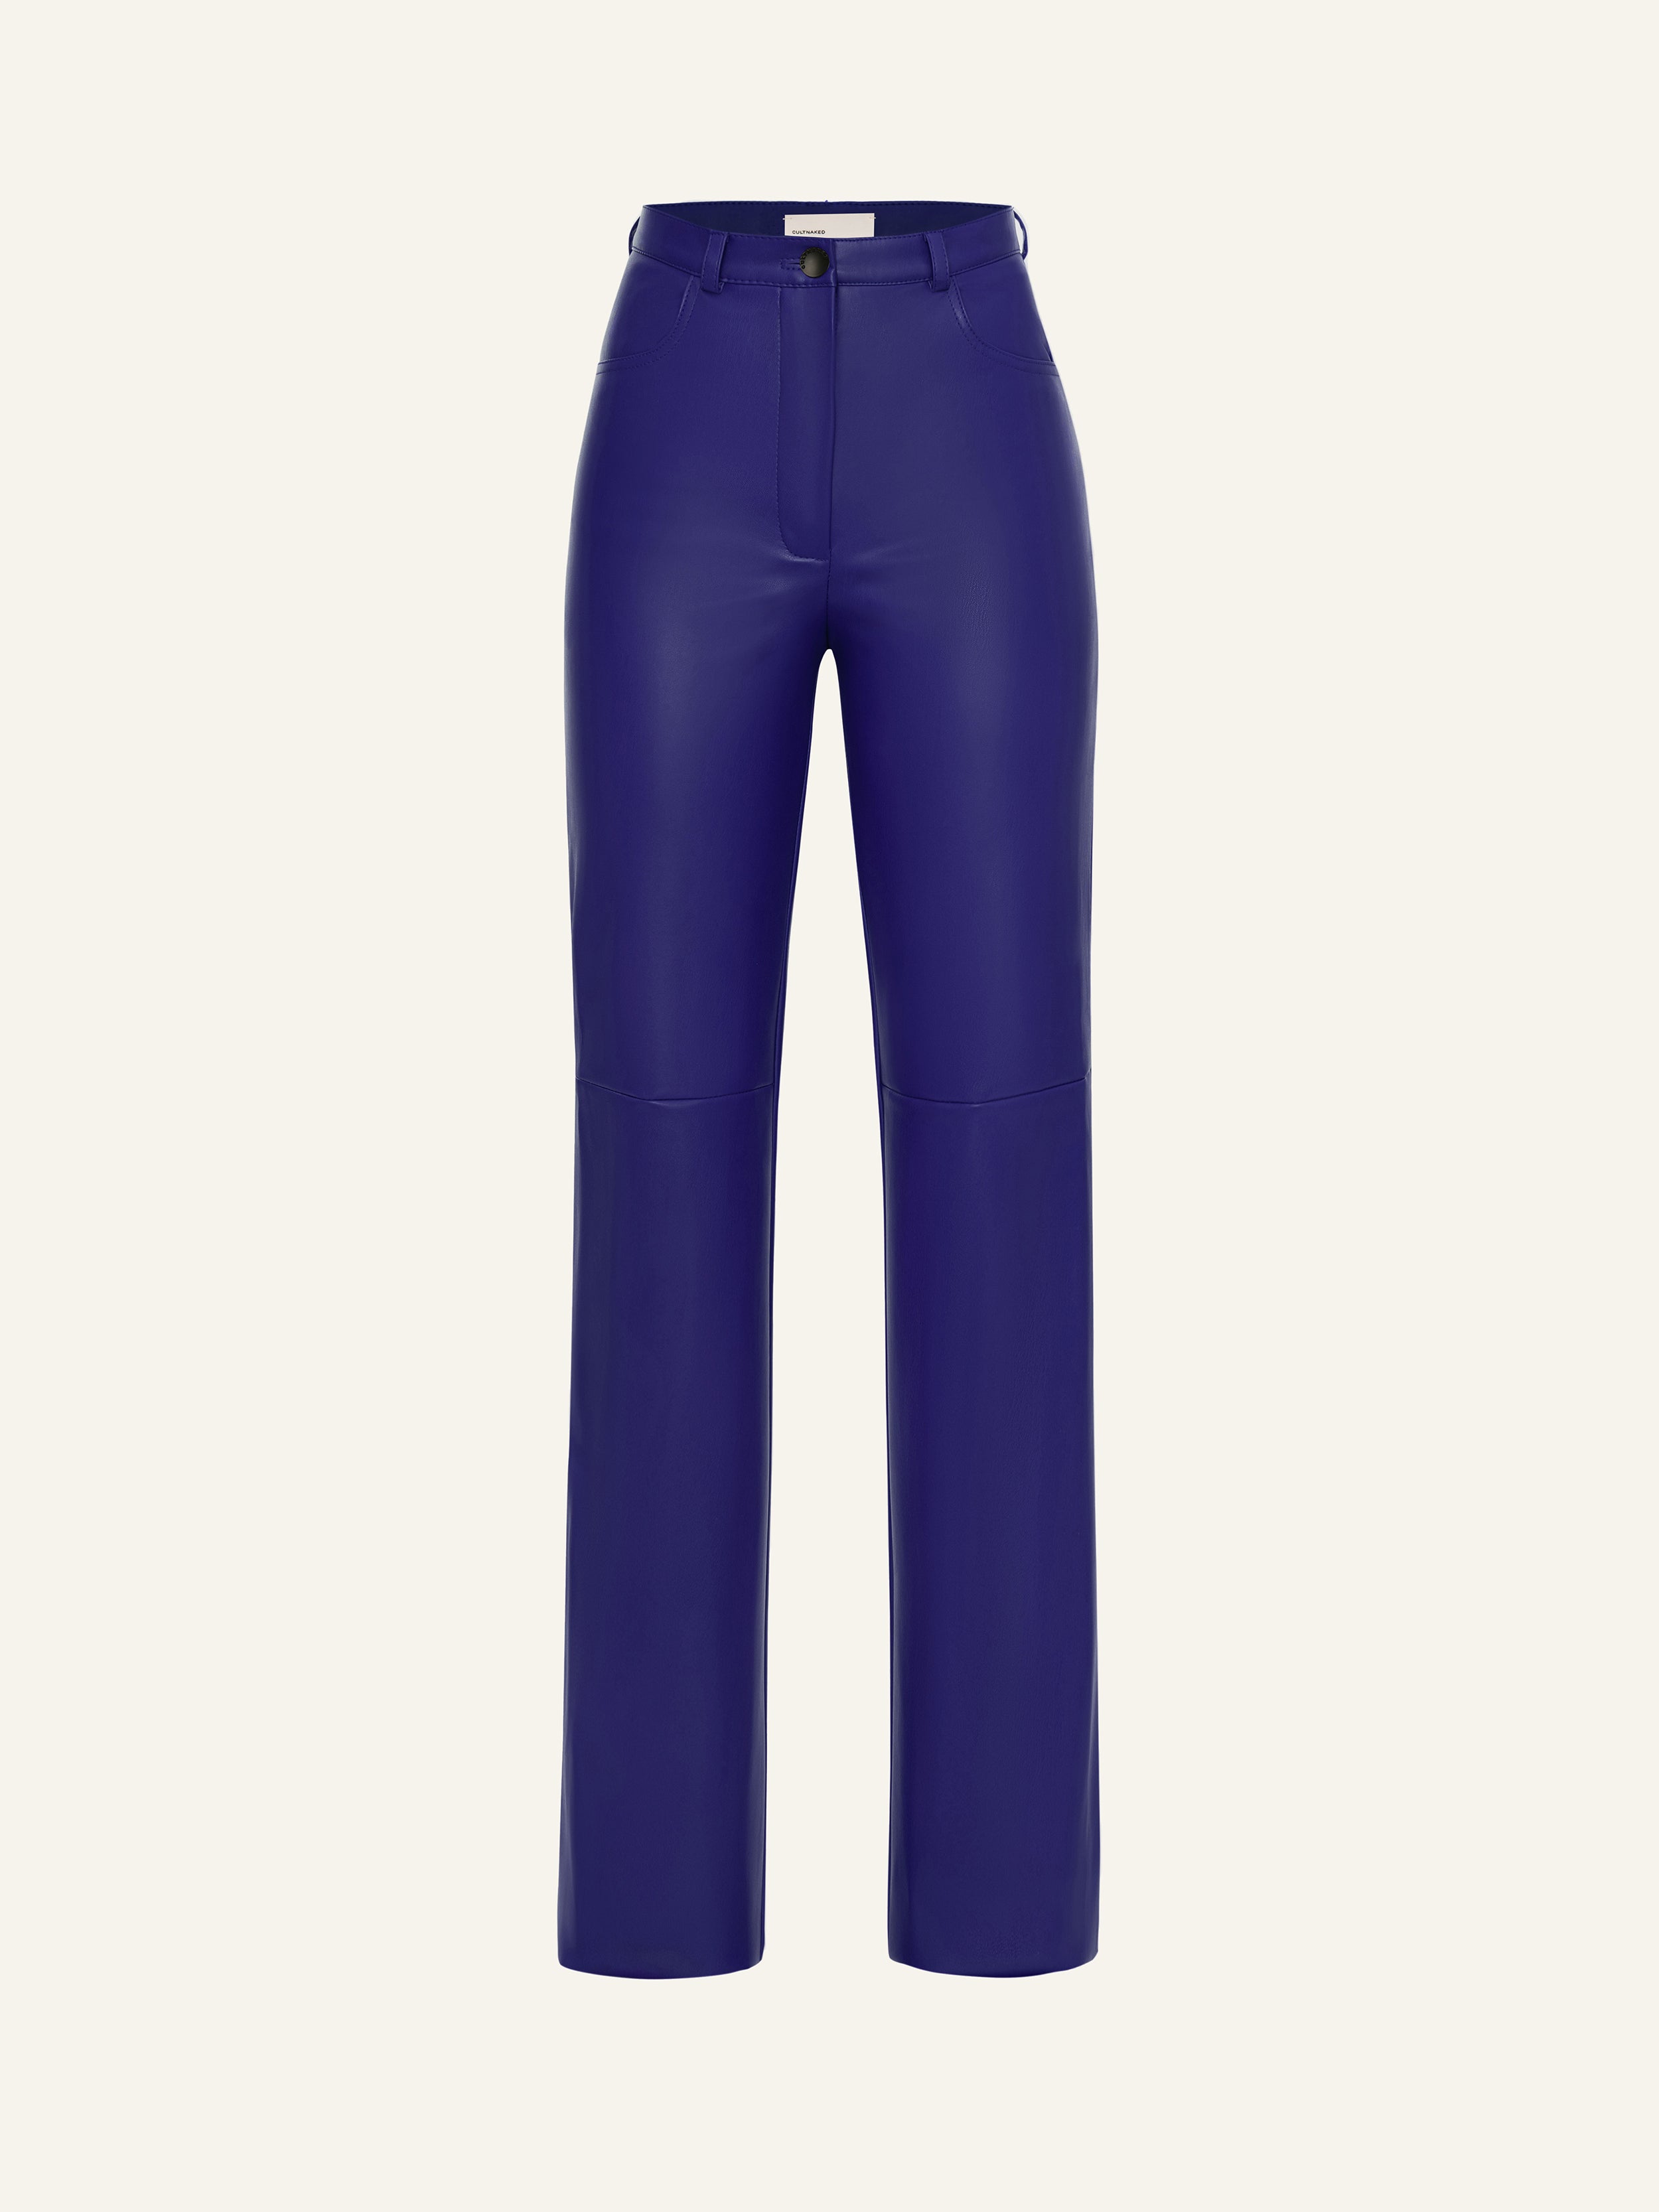 Product photo of purple vegan leather high rise straight leg pants